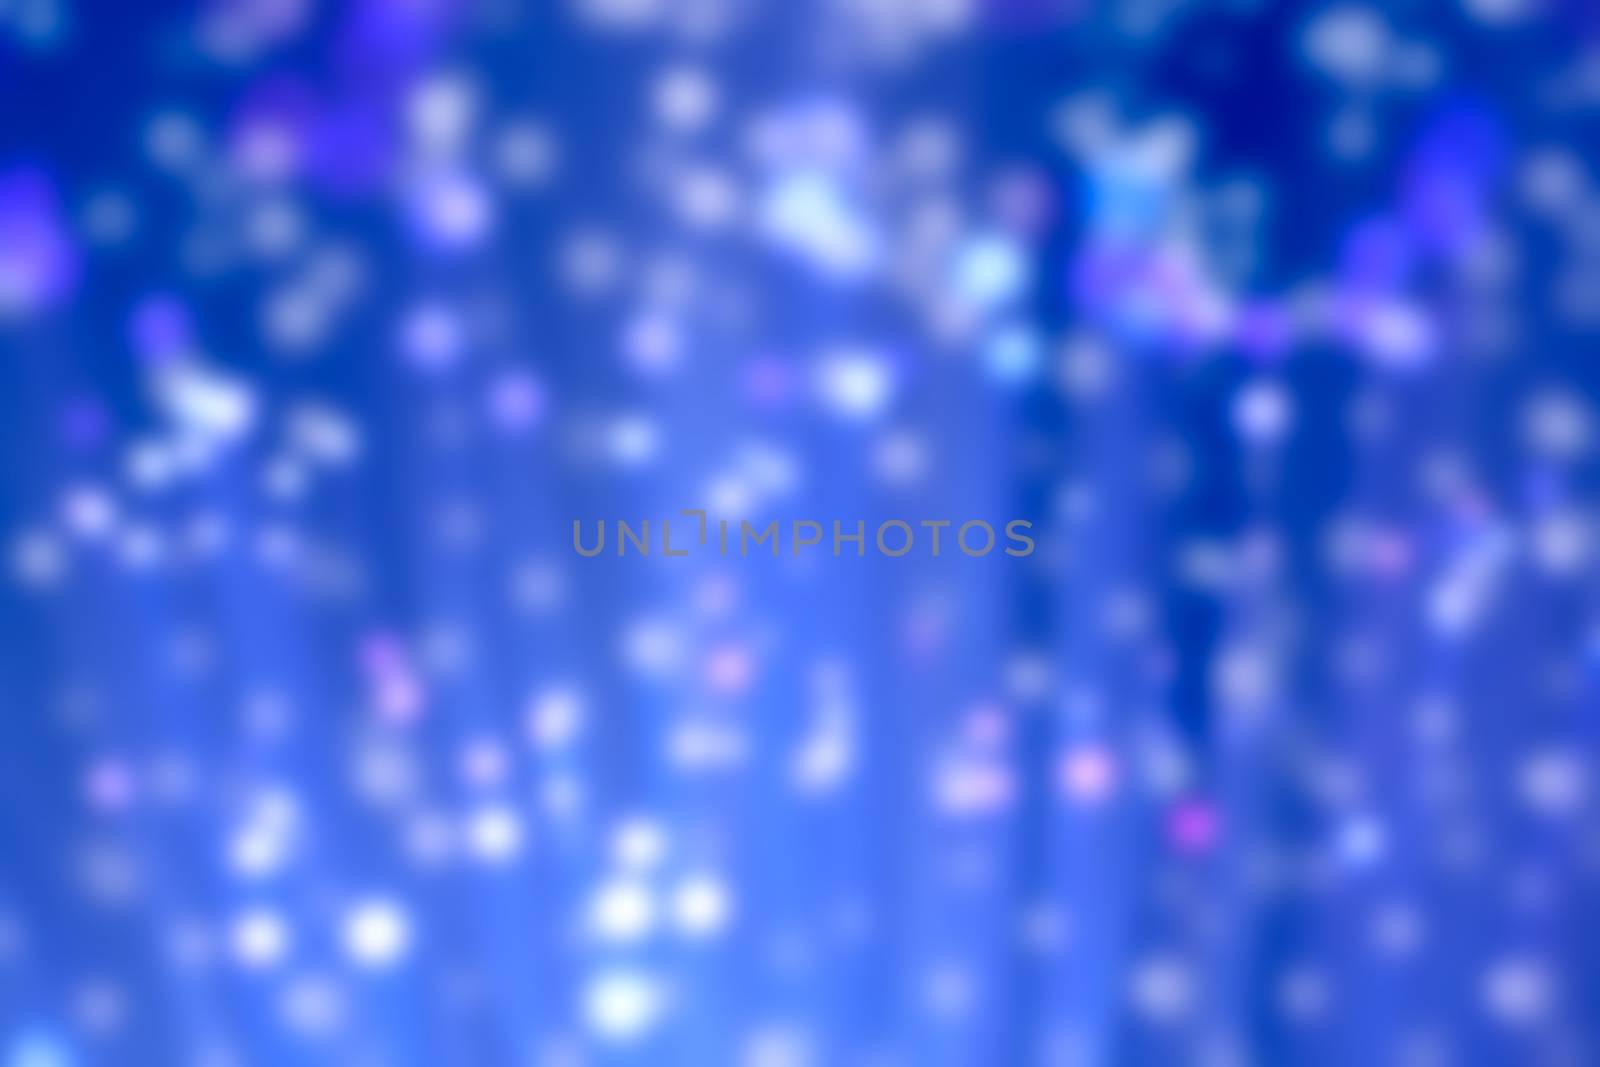 Abstract blur illuminated blue fiber optic light strands, bokeh background